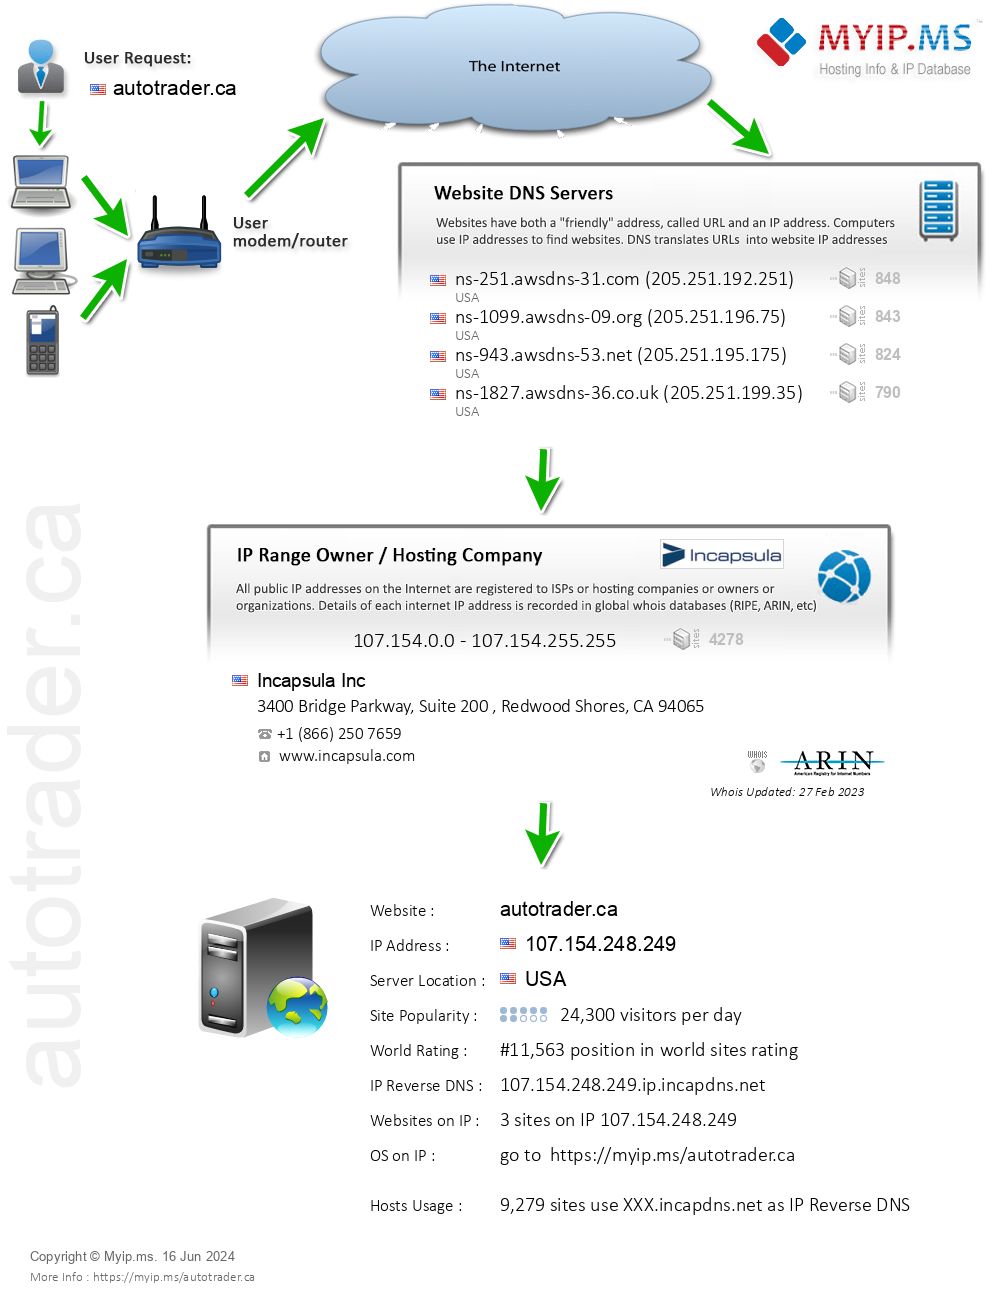 Autotrader.ca - Website Hosting Visual IP Diagram